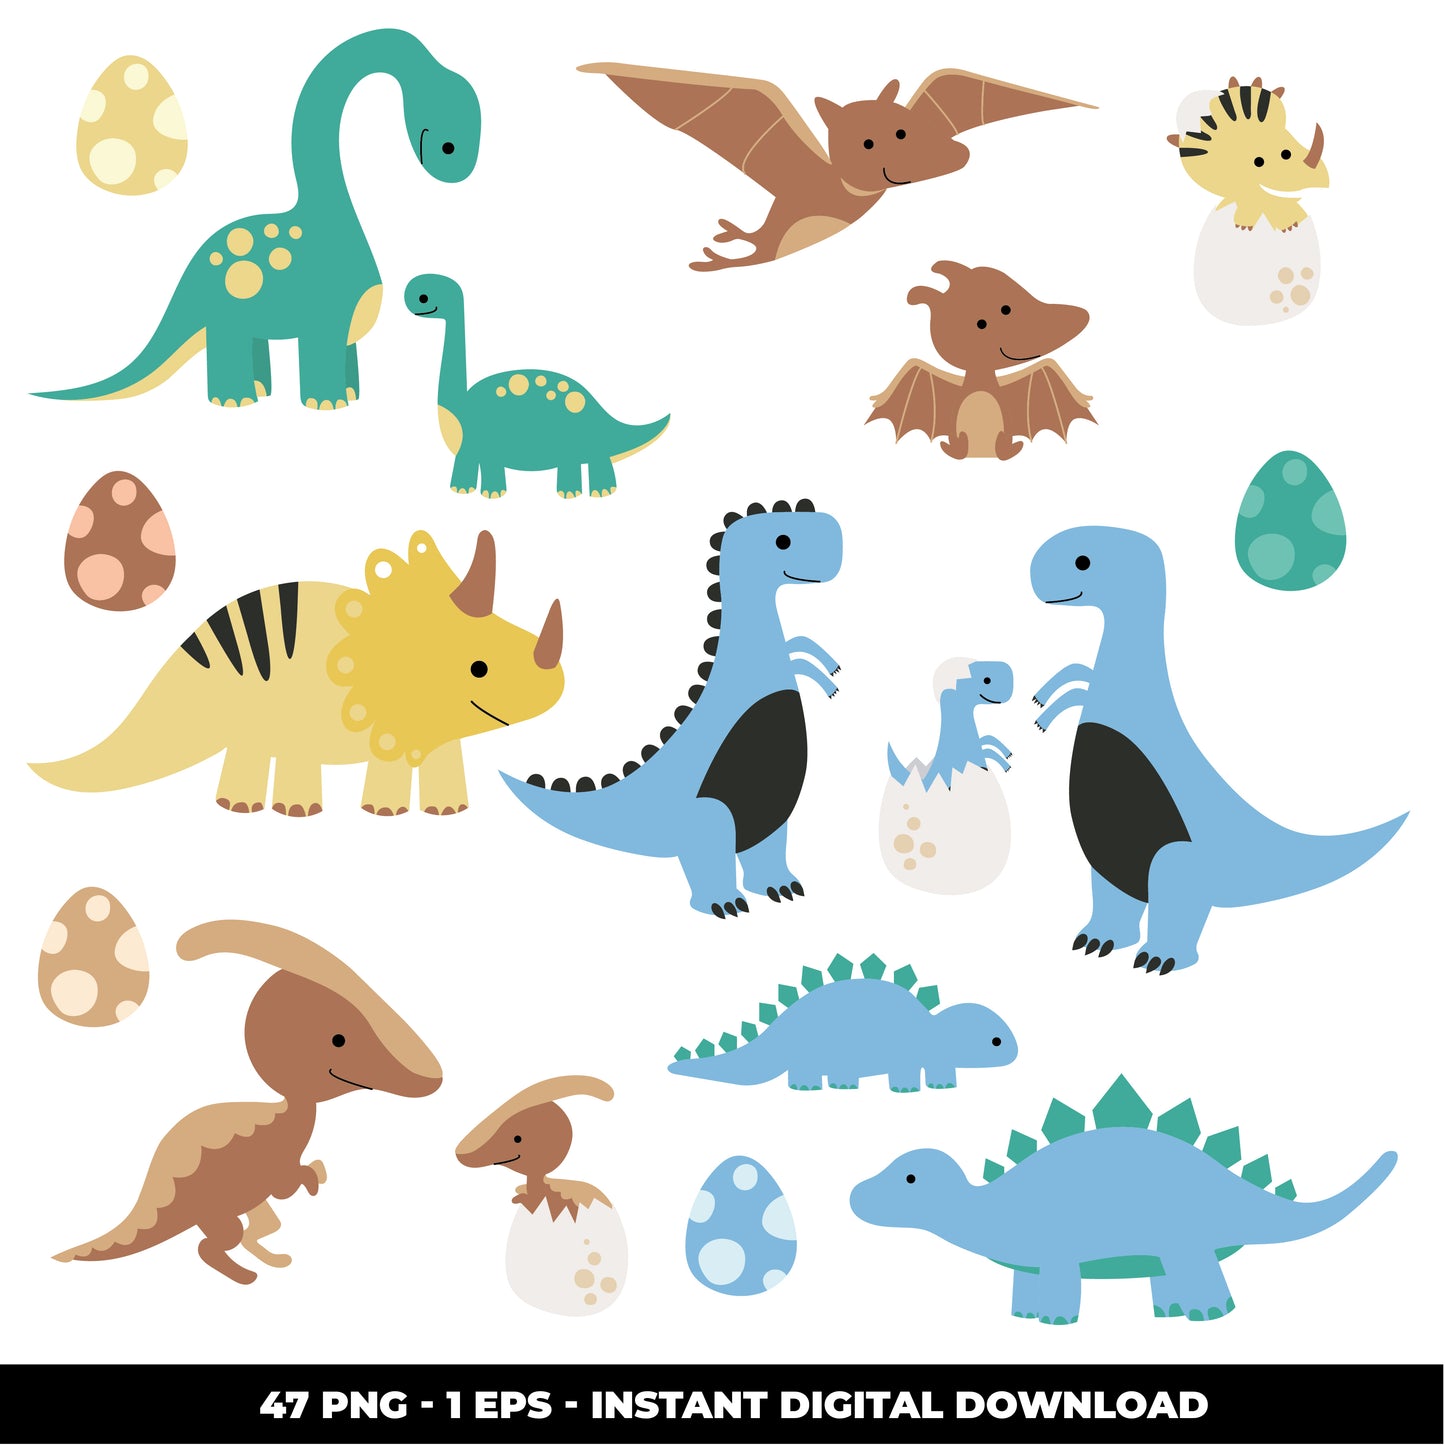 COD795 - Dinosaur clipart, kids dinosaur clipart, t-rex clipart, dino clipart, triceratops clipart files